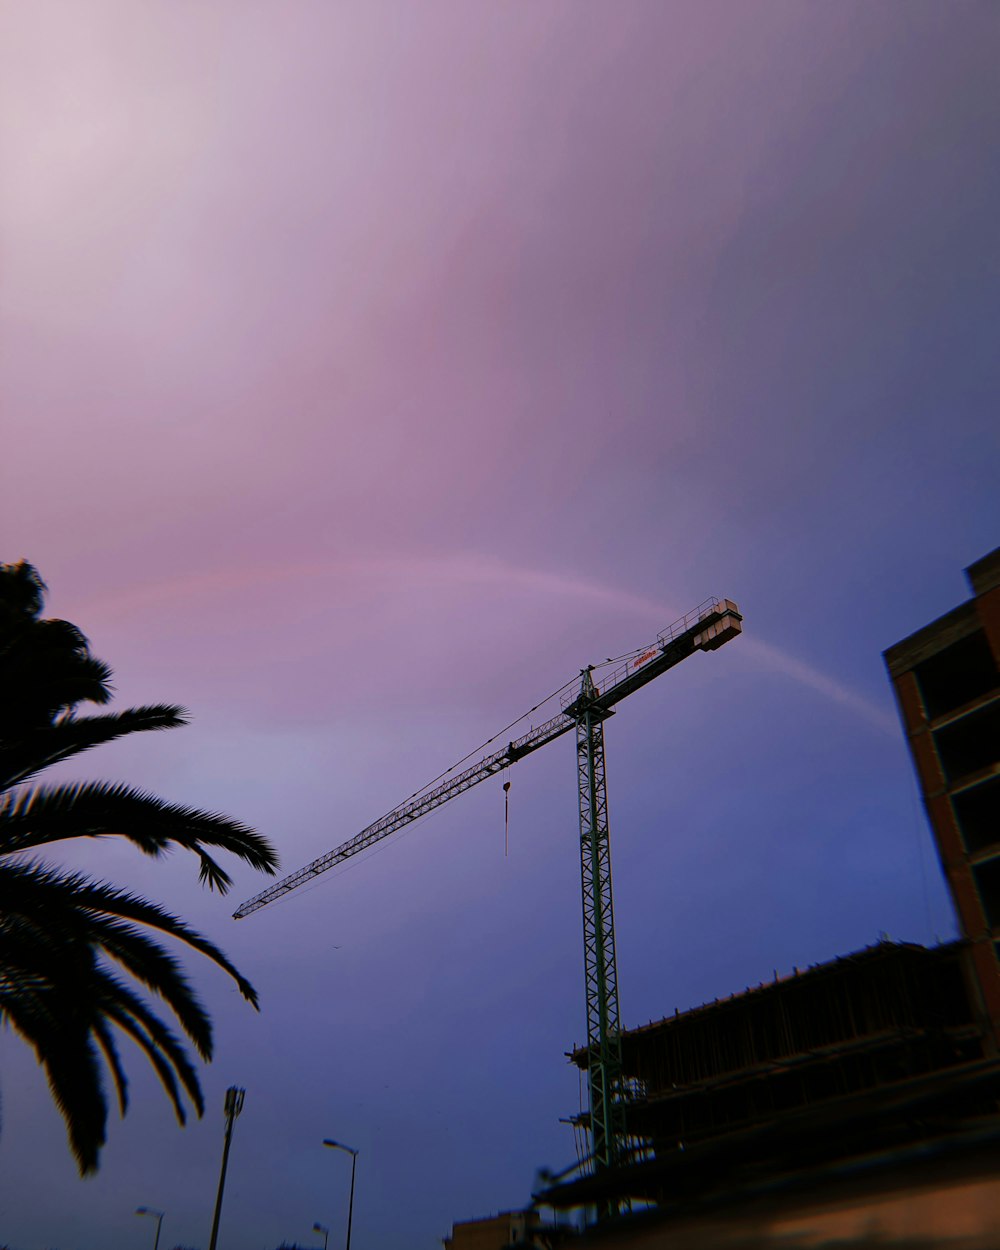 a crane and a building under a cloudy sky